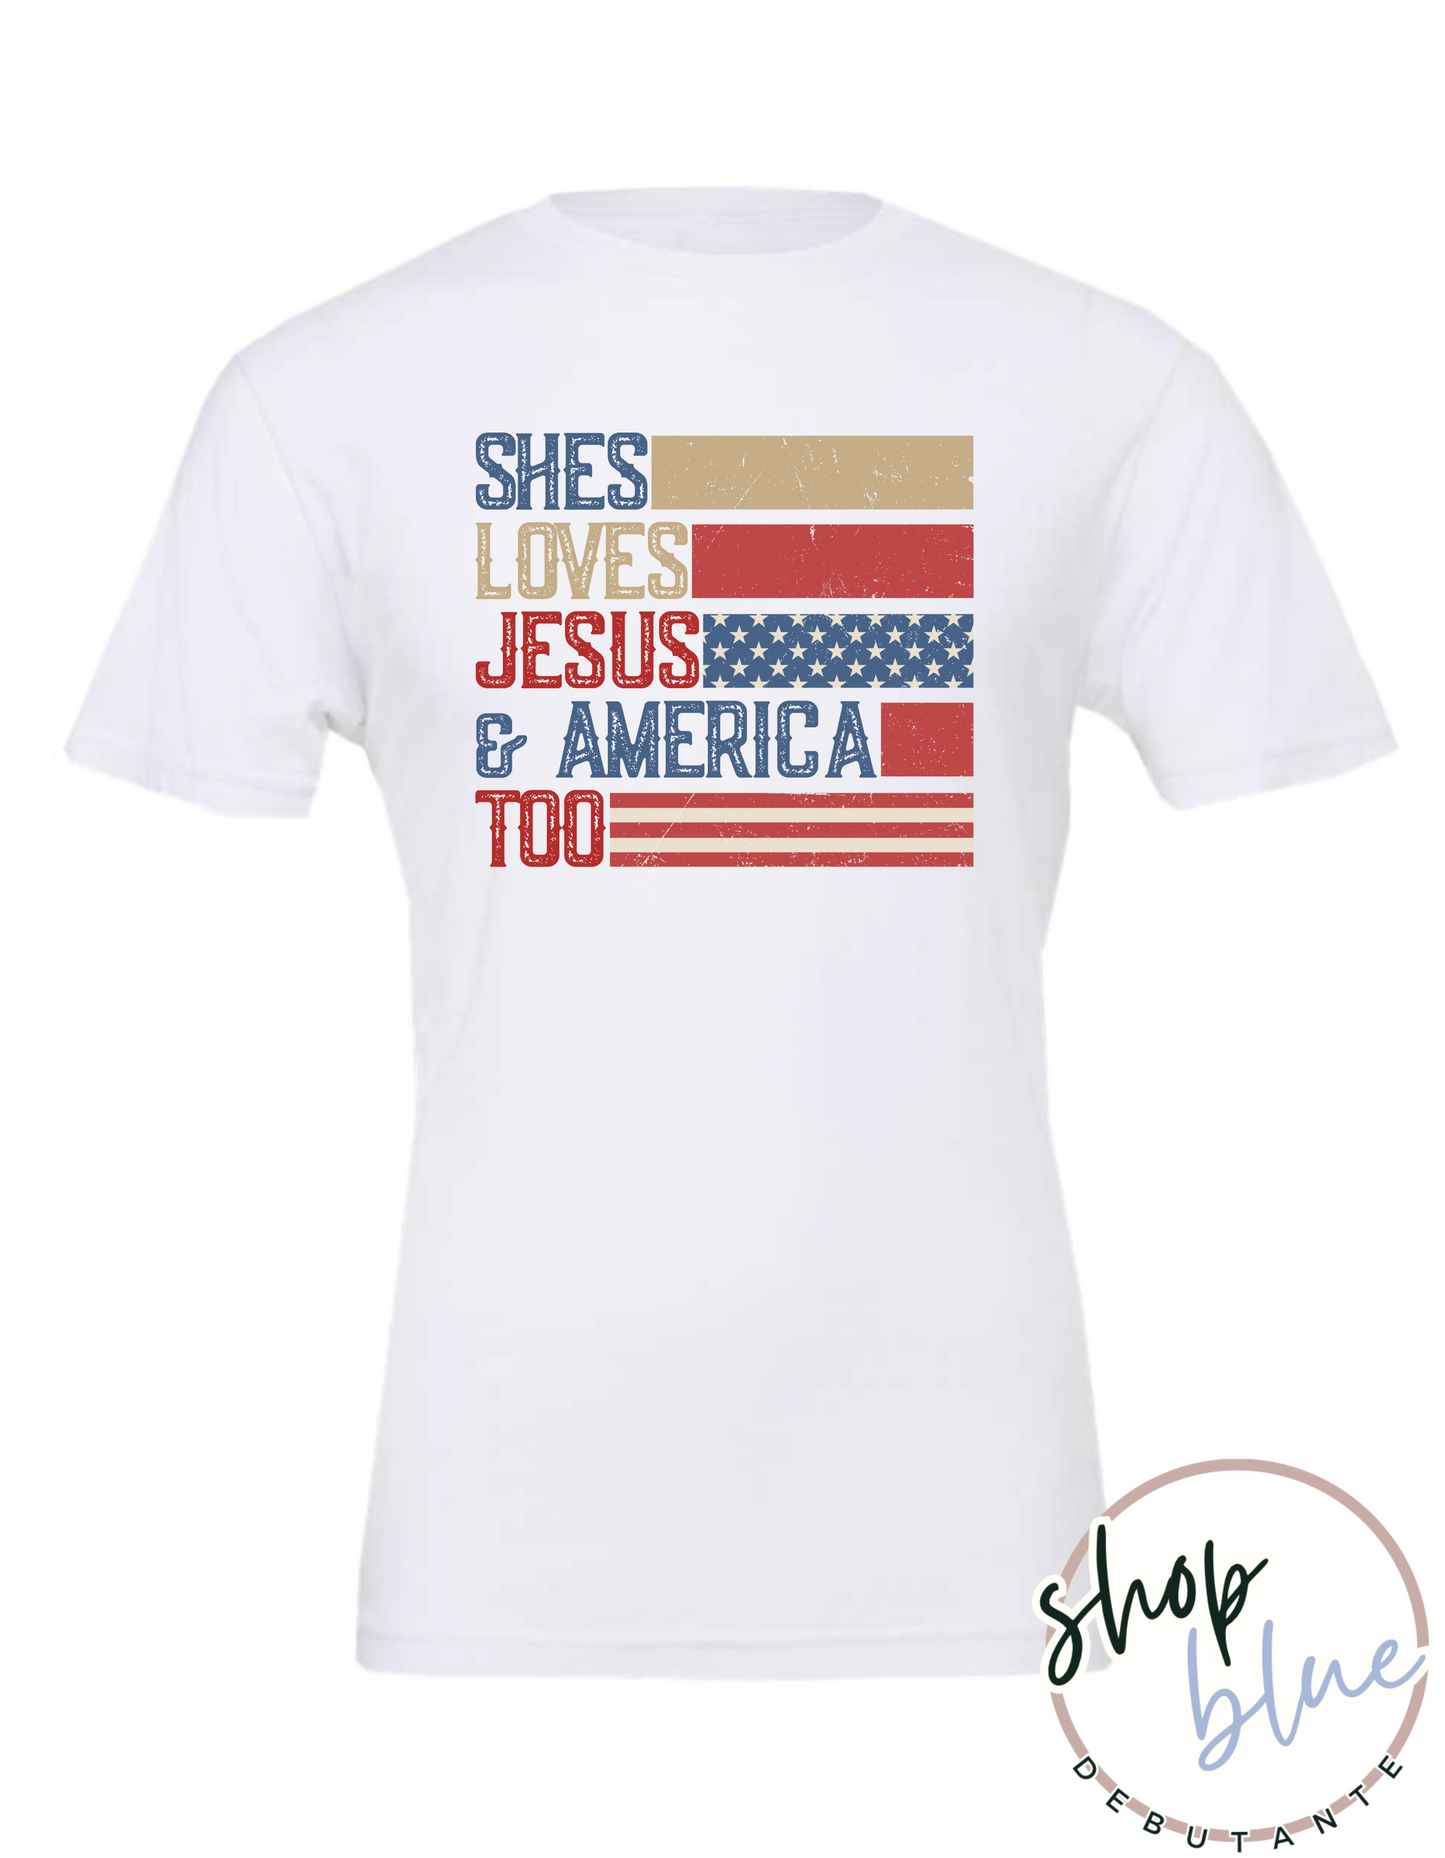 She Loves Jesus & America Too